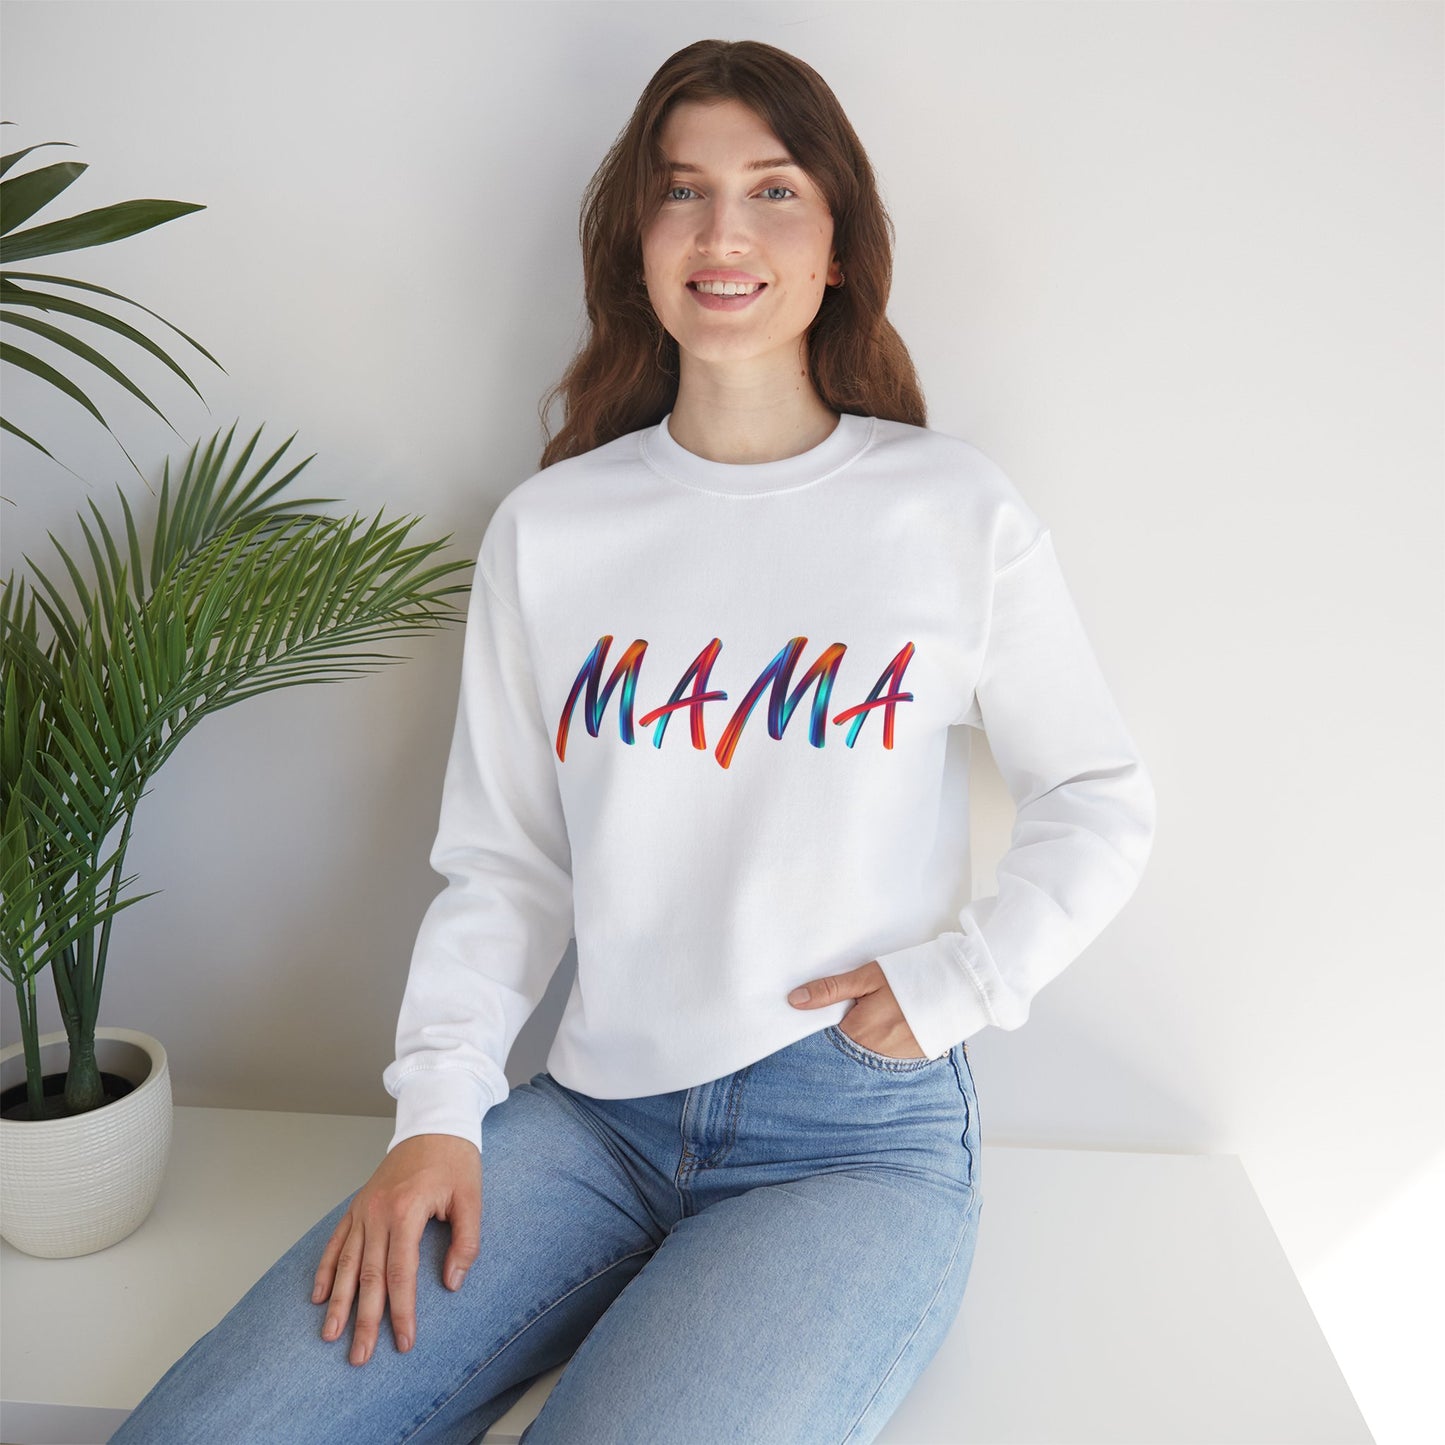 Mama Crewneck Sweatshirt - Unisex Sweatshirt - Matching Family Outfit